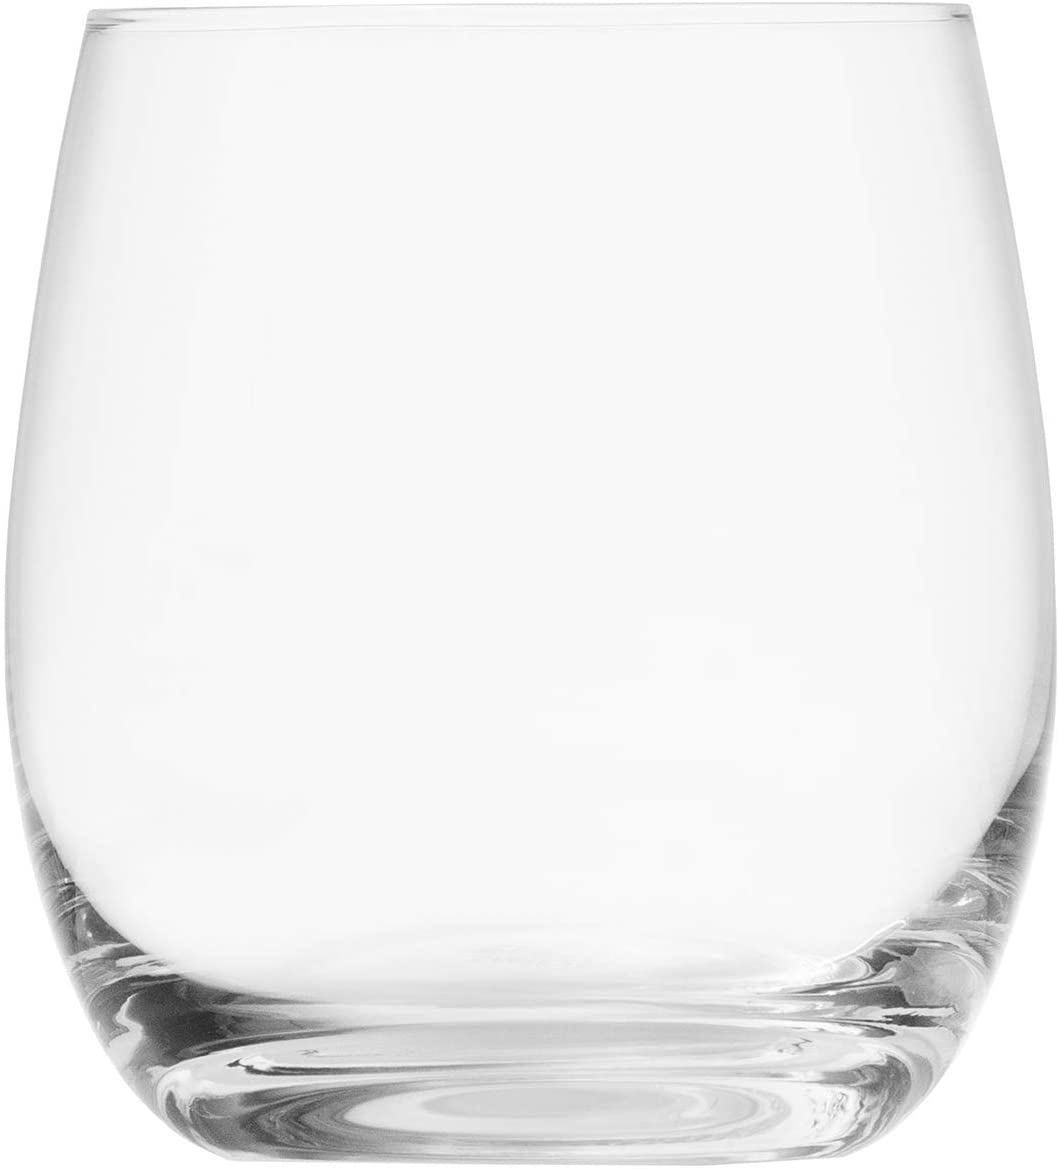 Schott Zwiesel Tritan Crystal Banquet Barware Cocktail Glasses 11oz / 325ml - Pack of 6